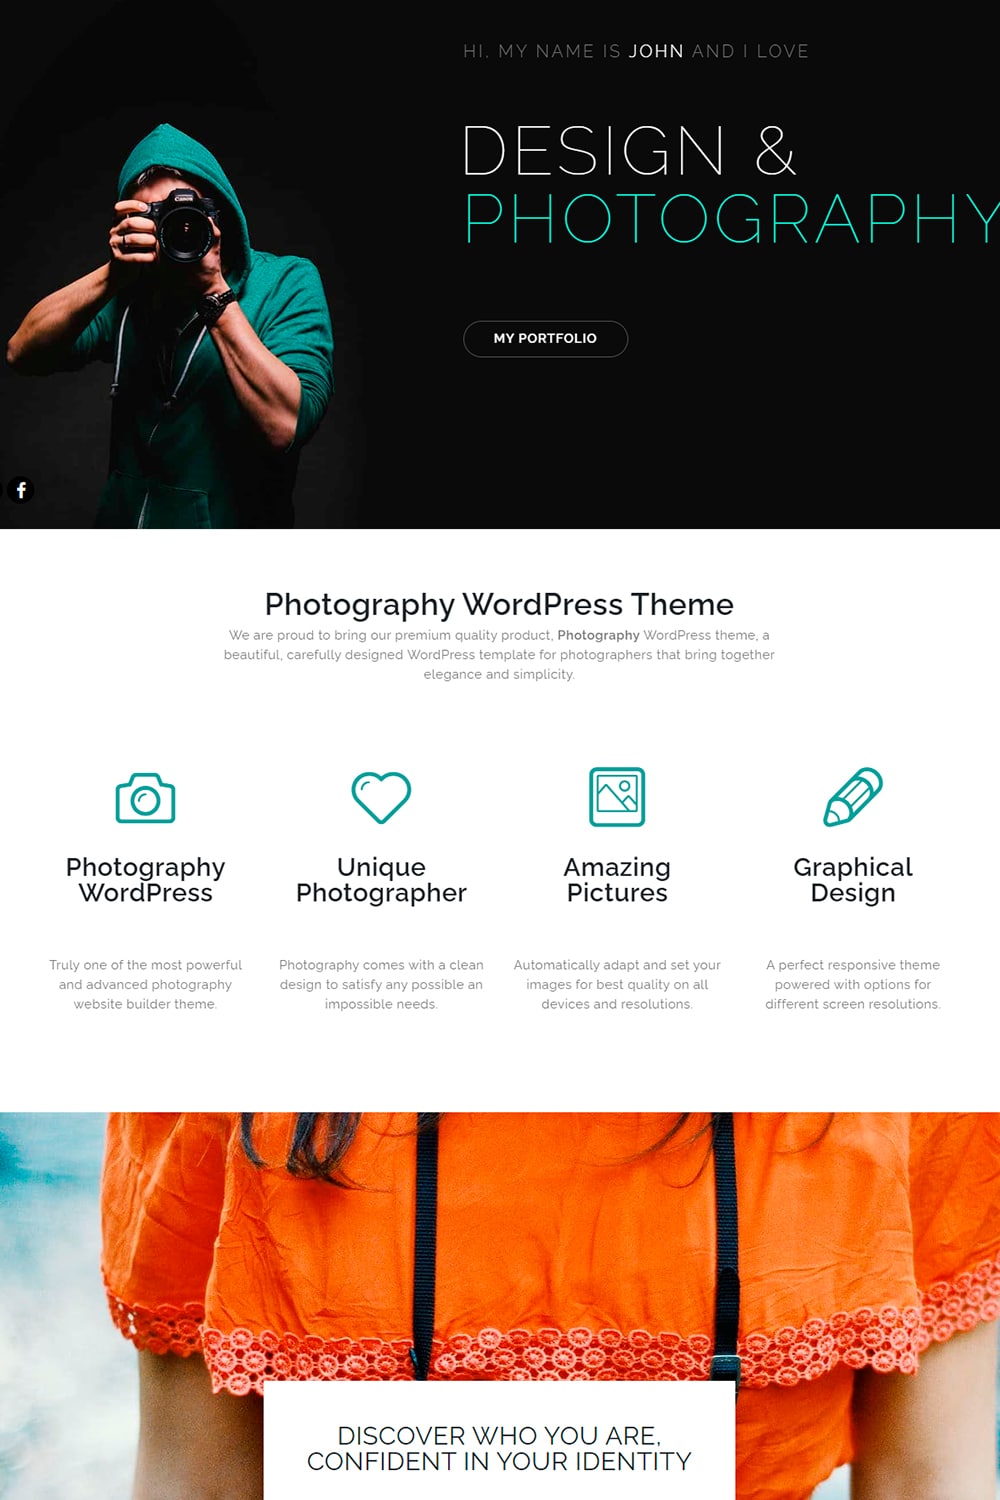 Photography WordPress Theme and templates website builder portfolio gallery